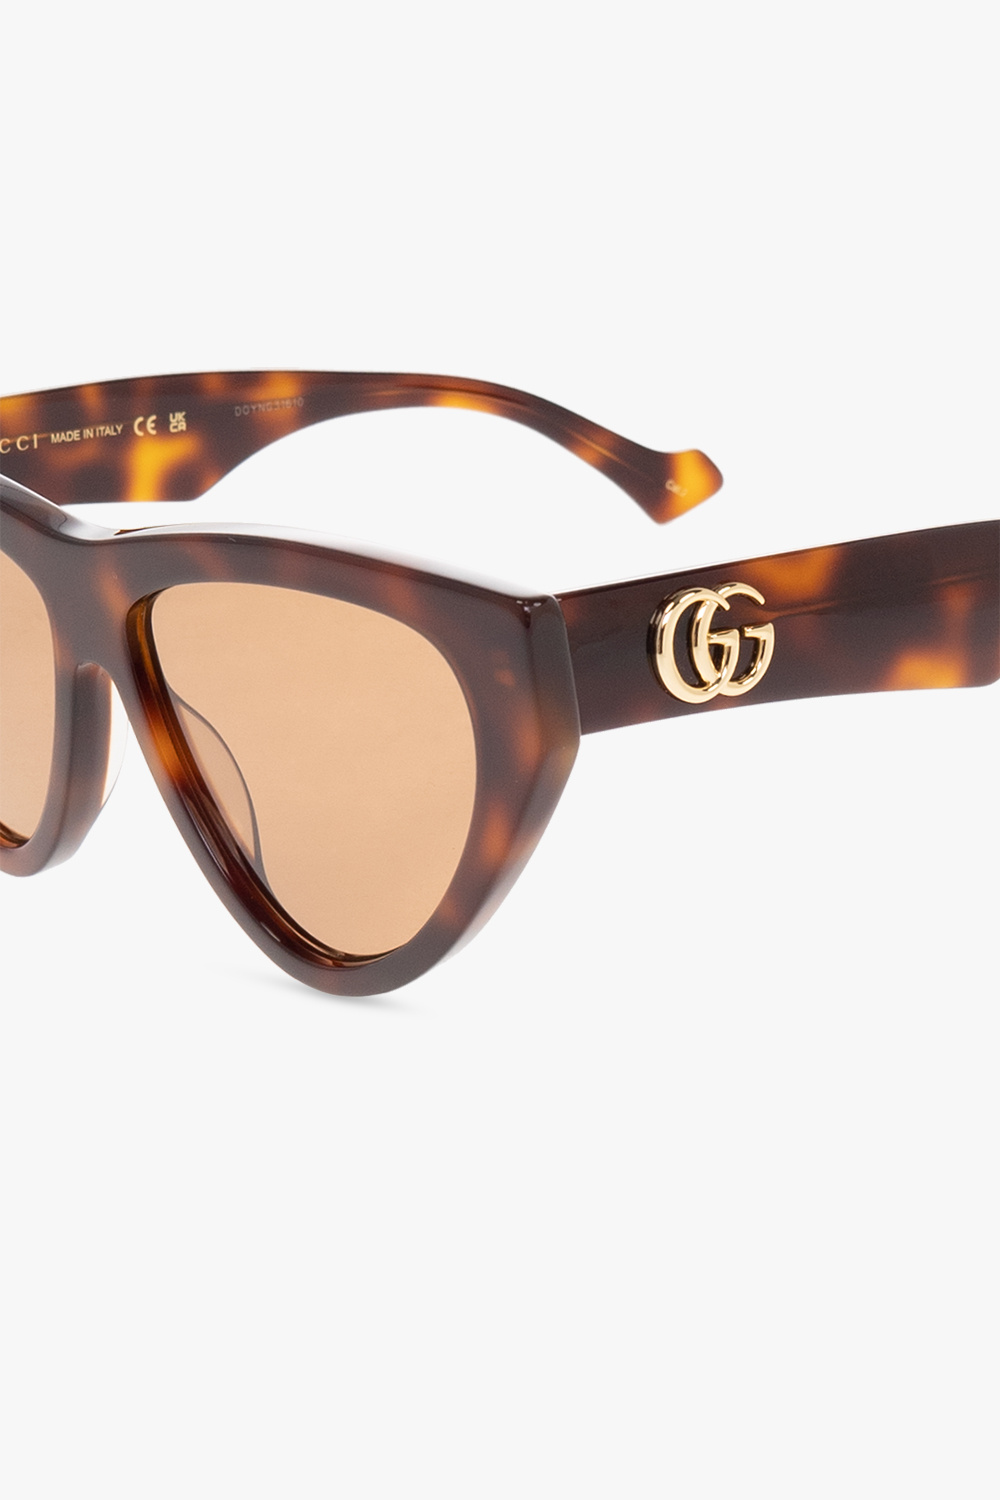 Gucci Foolish sunglasses